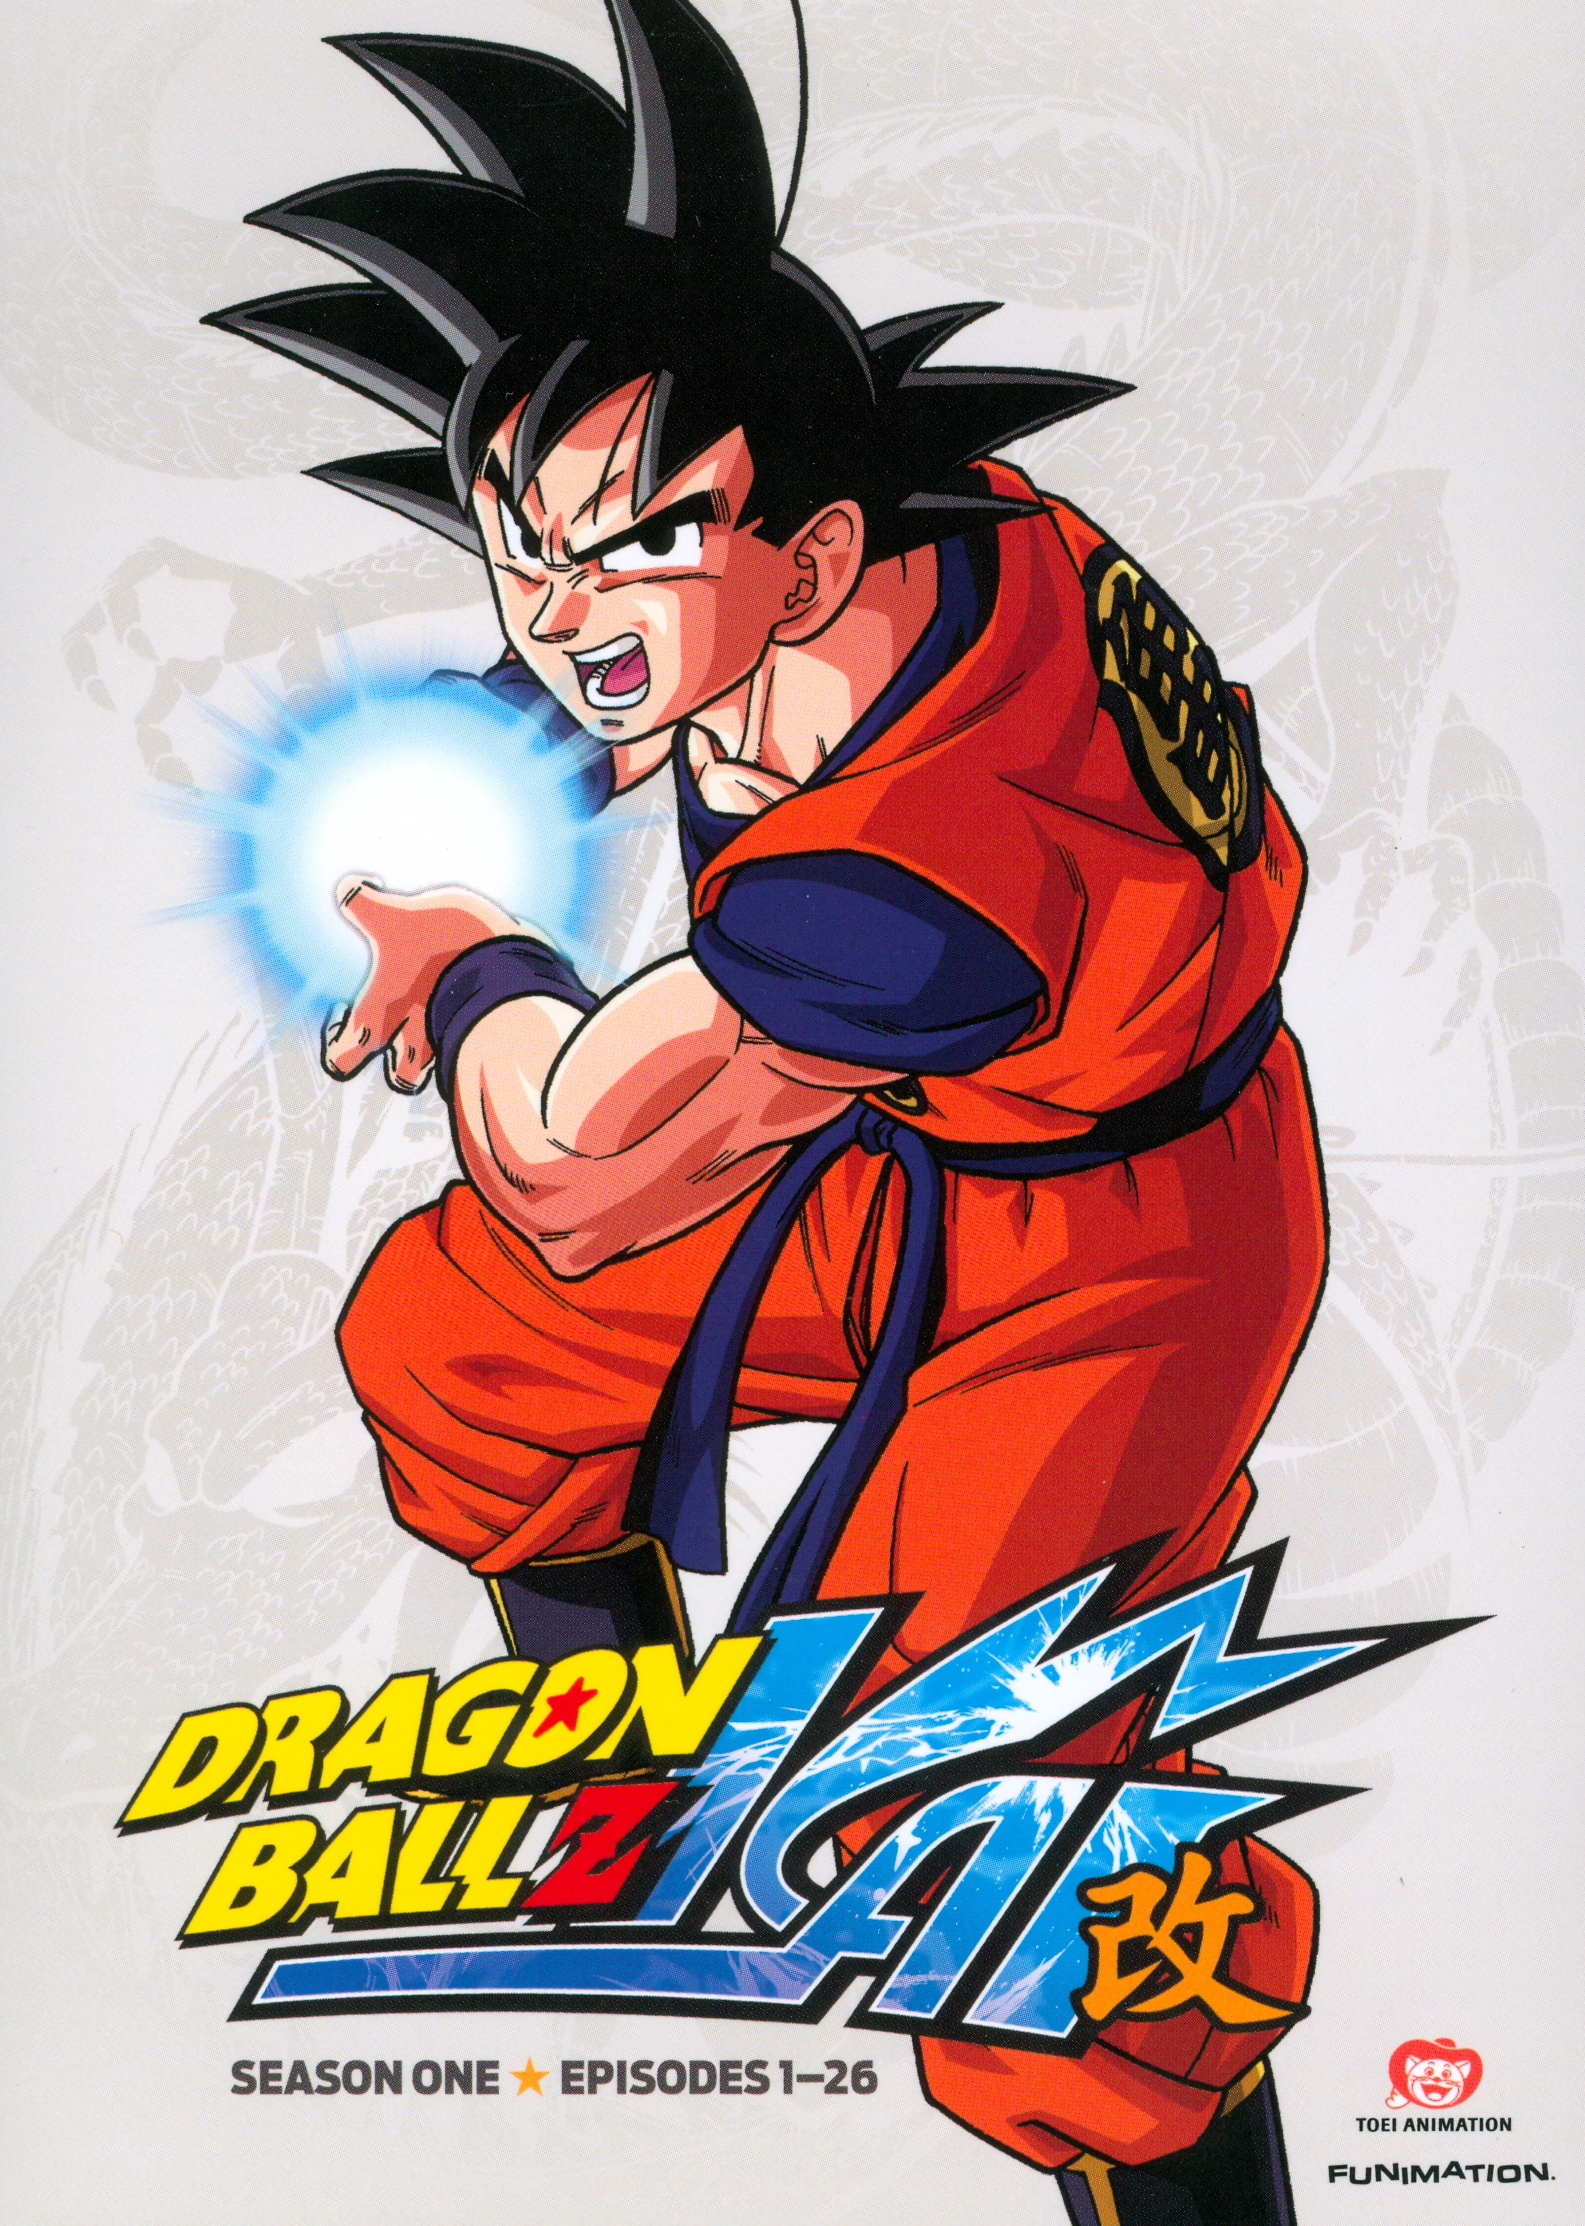 Dragon Ball Kai Episode 1 Summary+Review